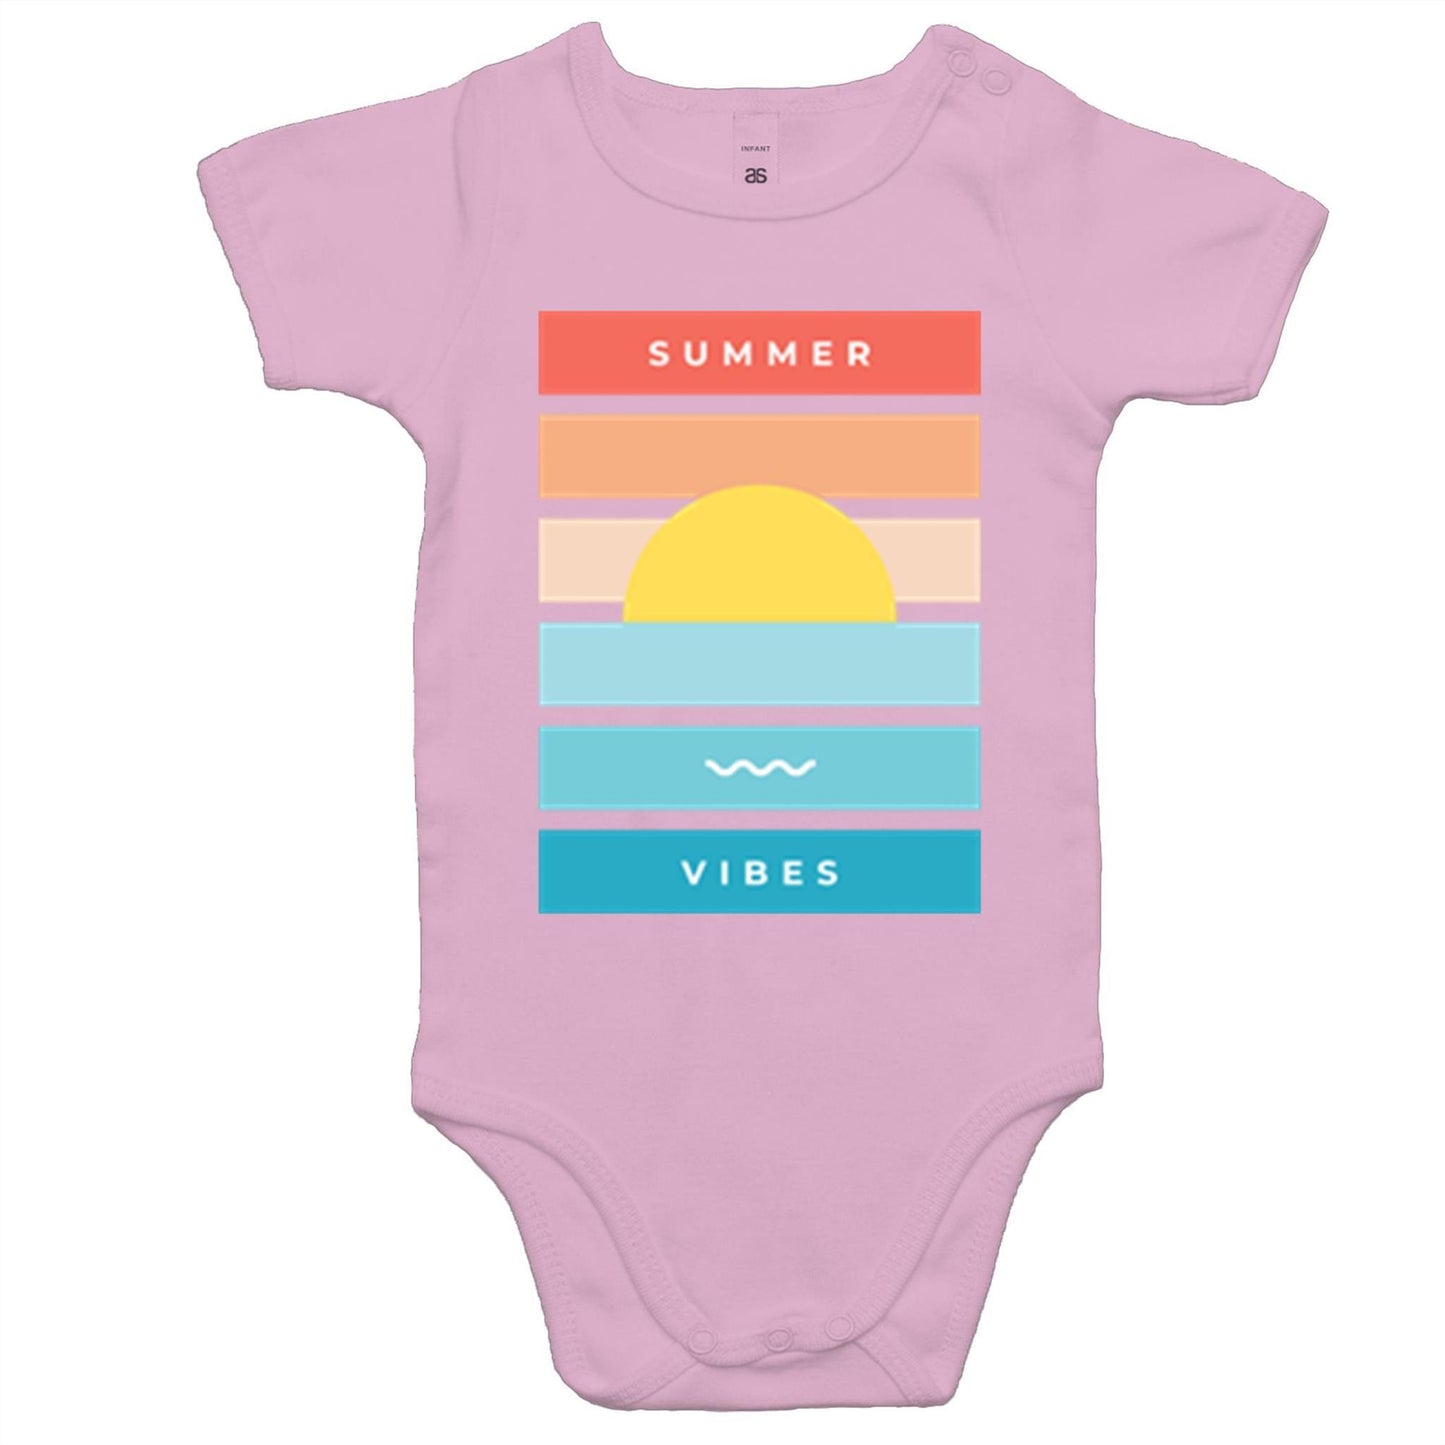 Summer Vibes - Baby Bodysuit Pink Baby Bodysuit kids Summer